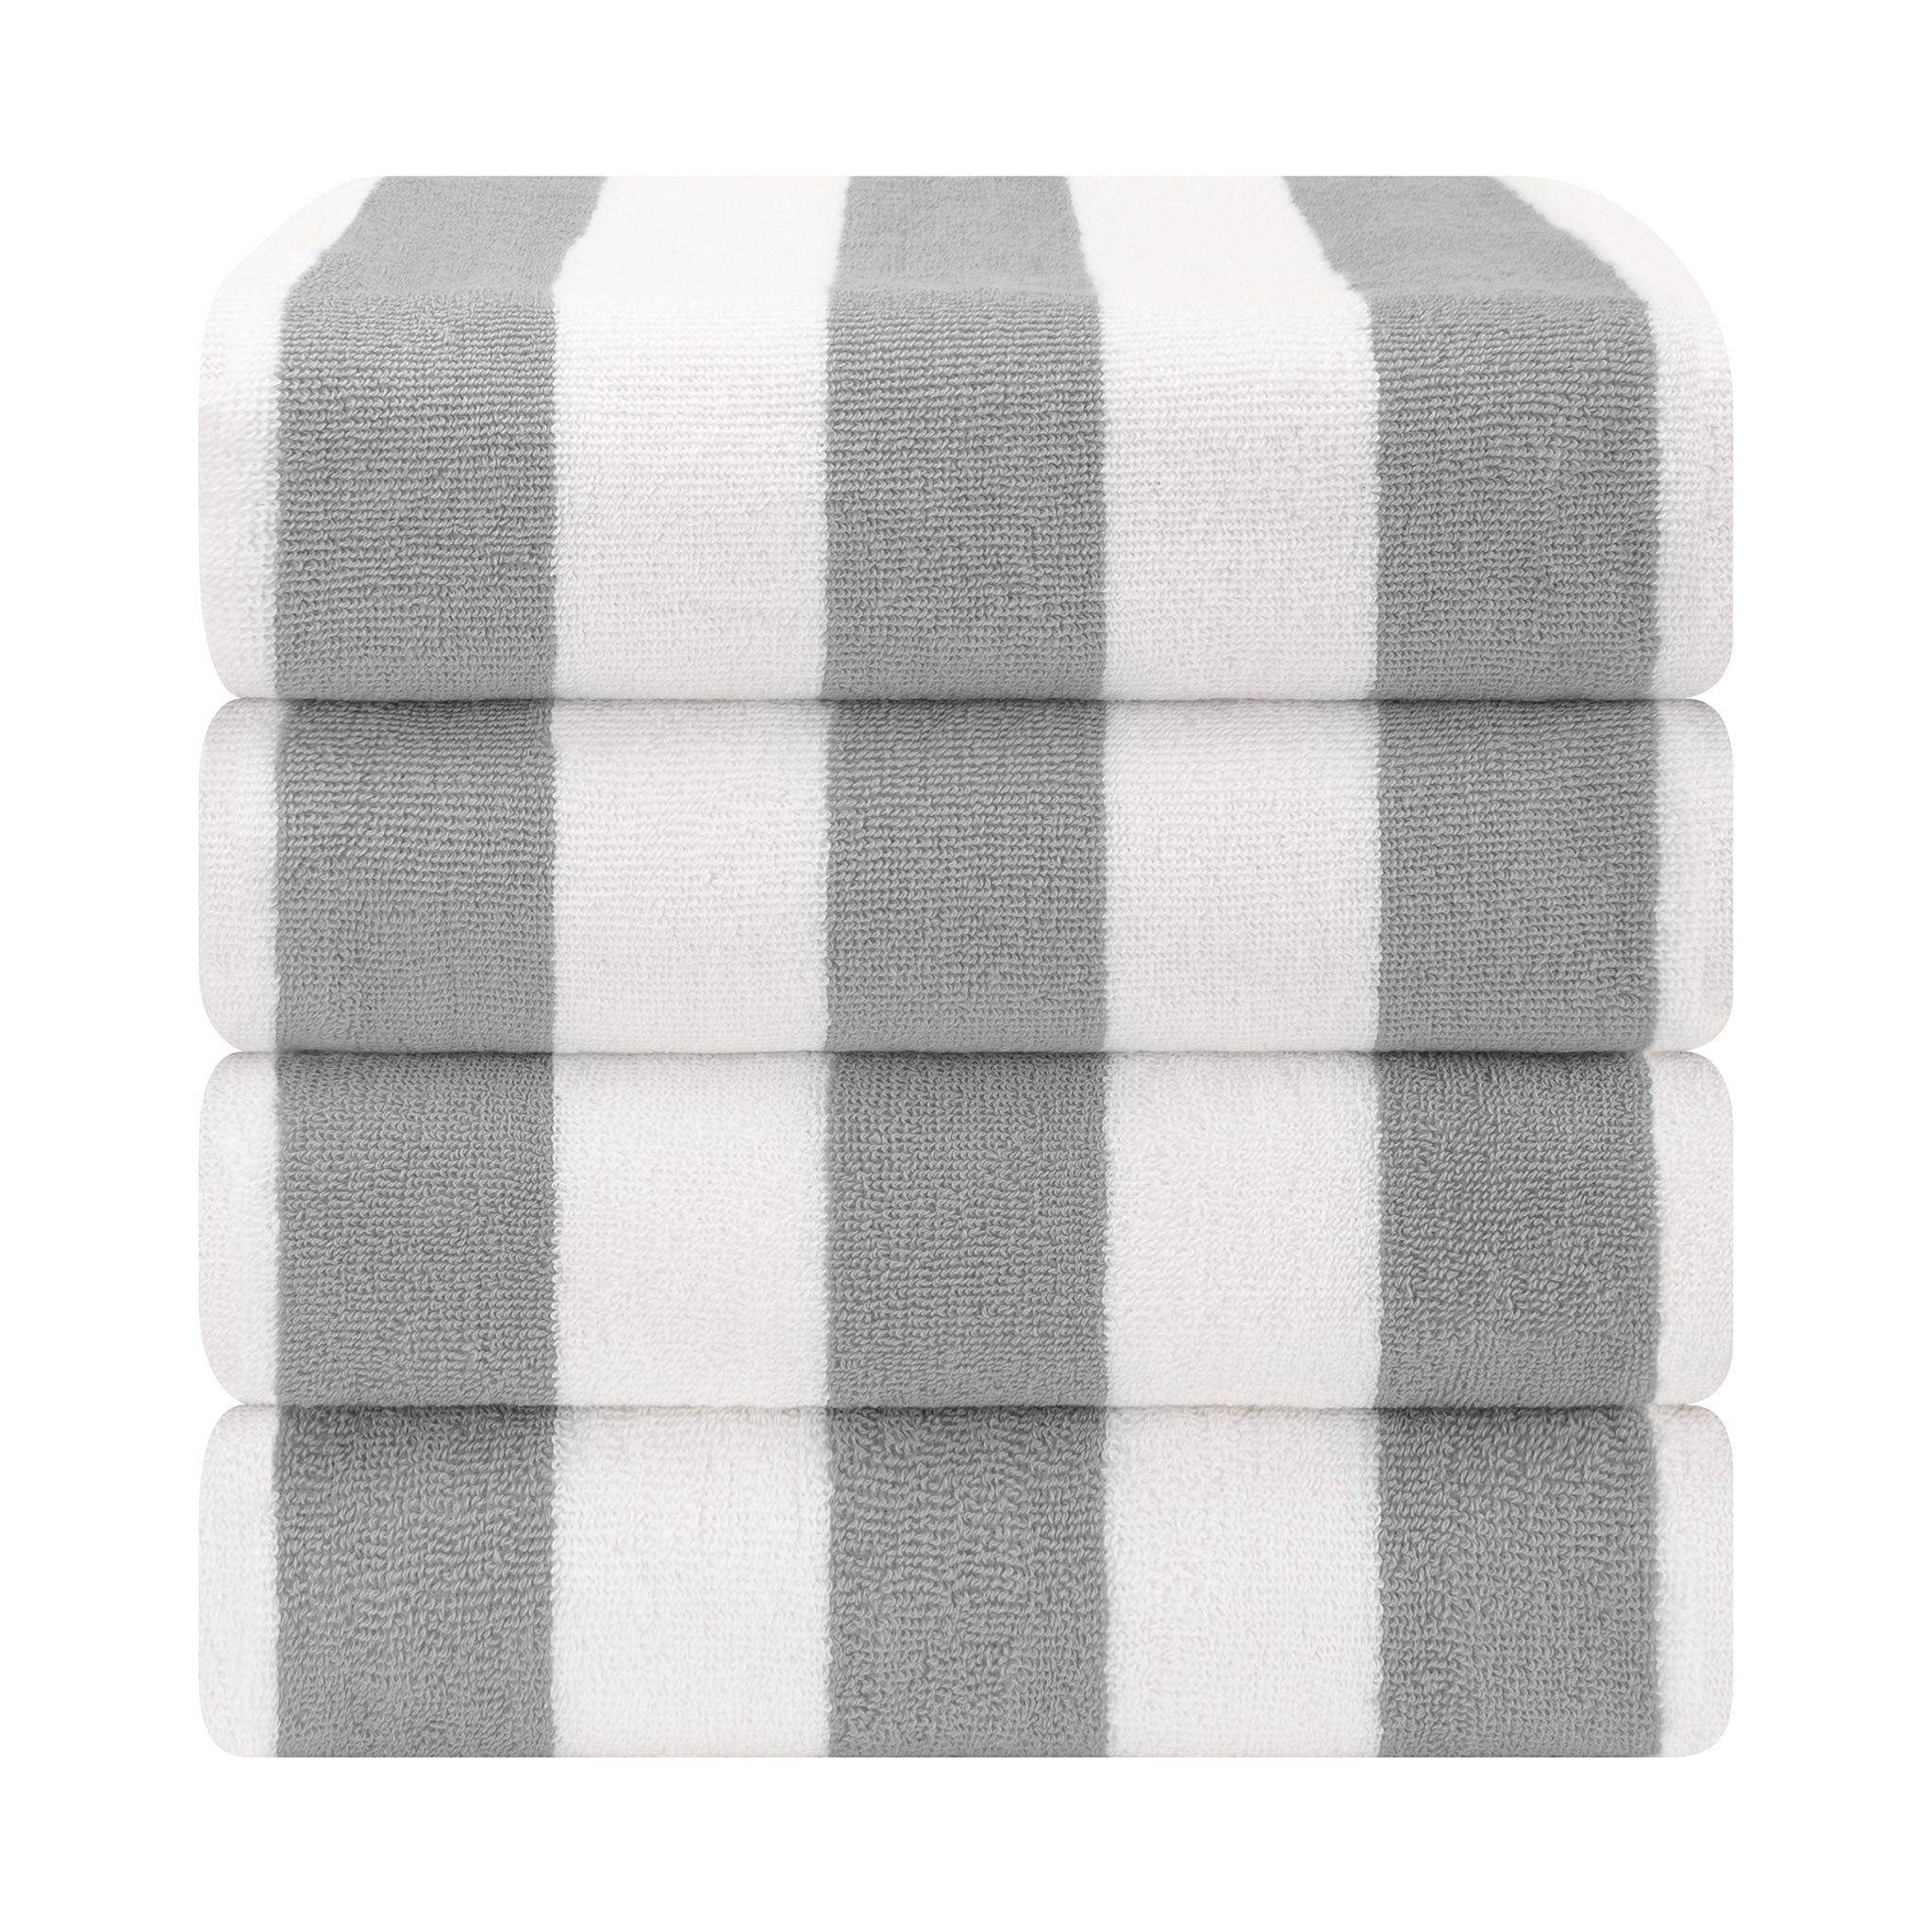 American Soft Linen 100% Cotton 4 Pack Beach Towels Cabana Striped Pool Towels -rockridge-gray-2